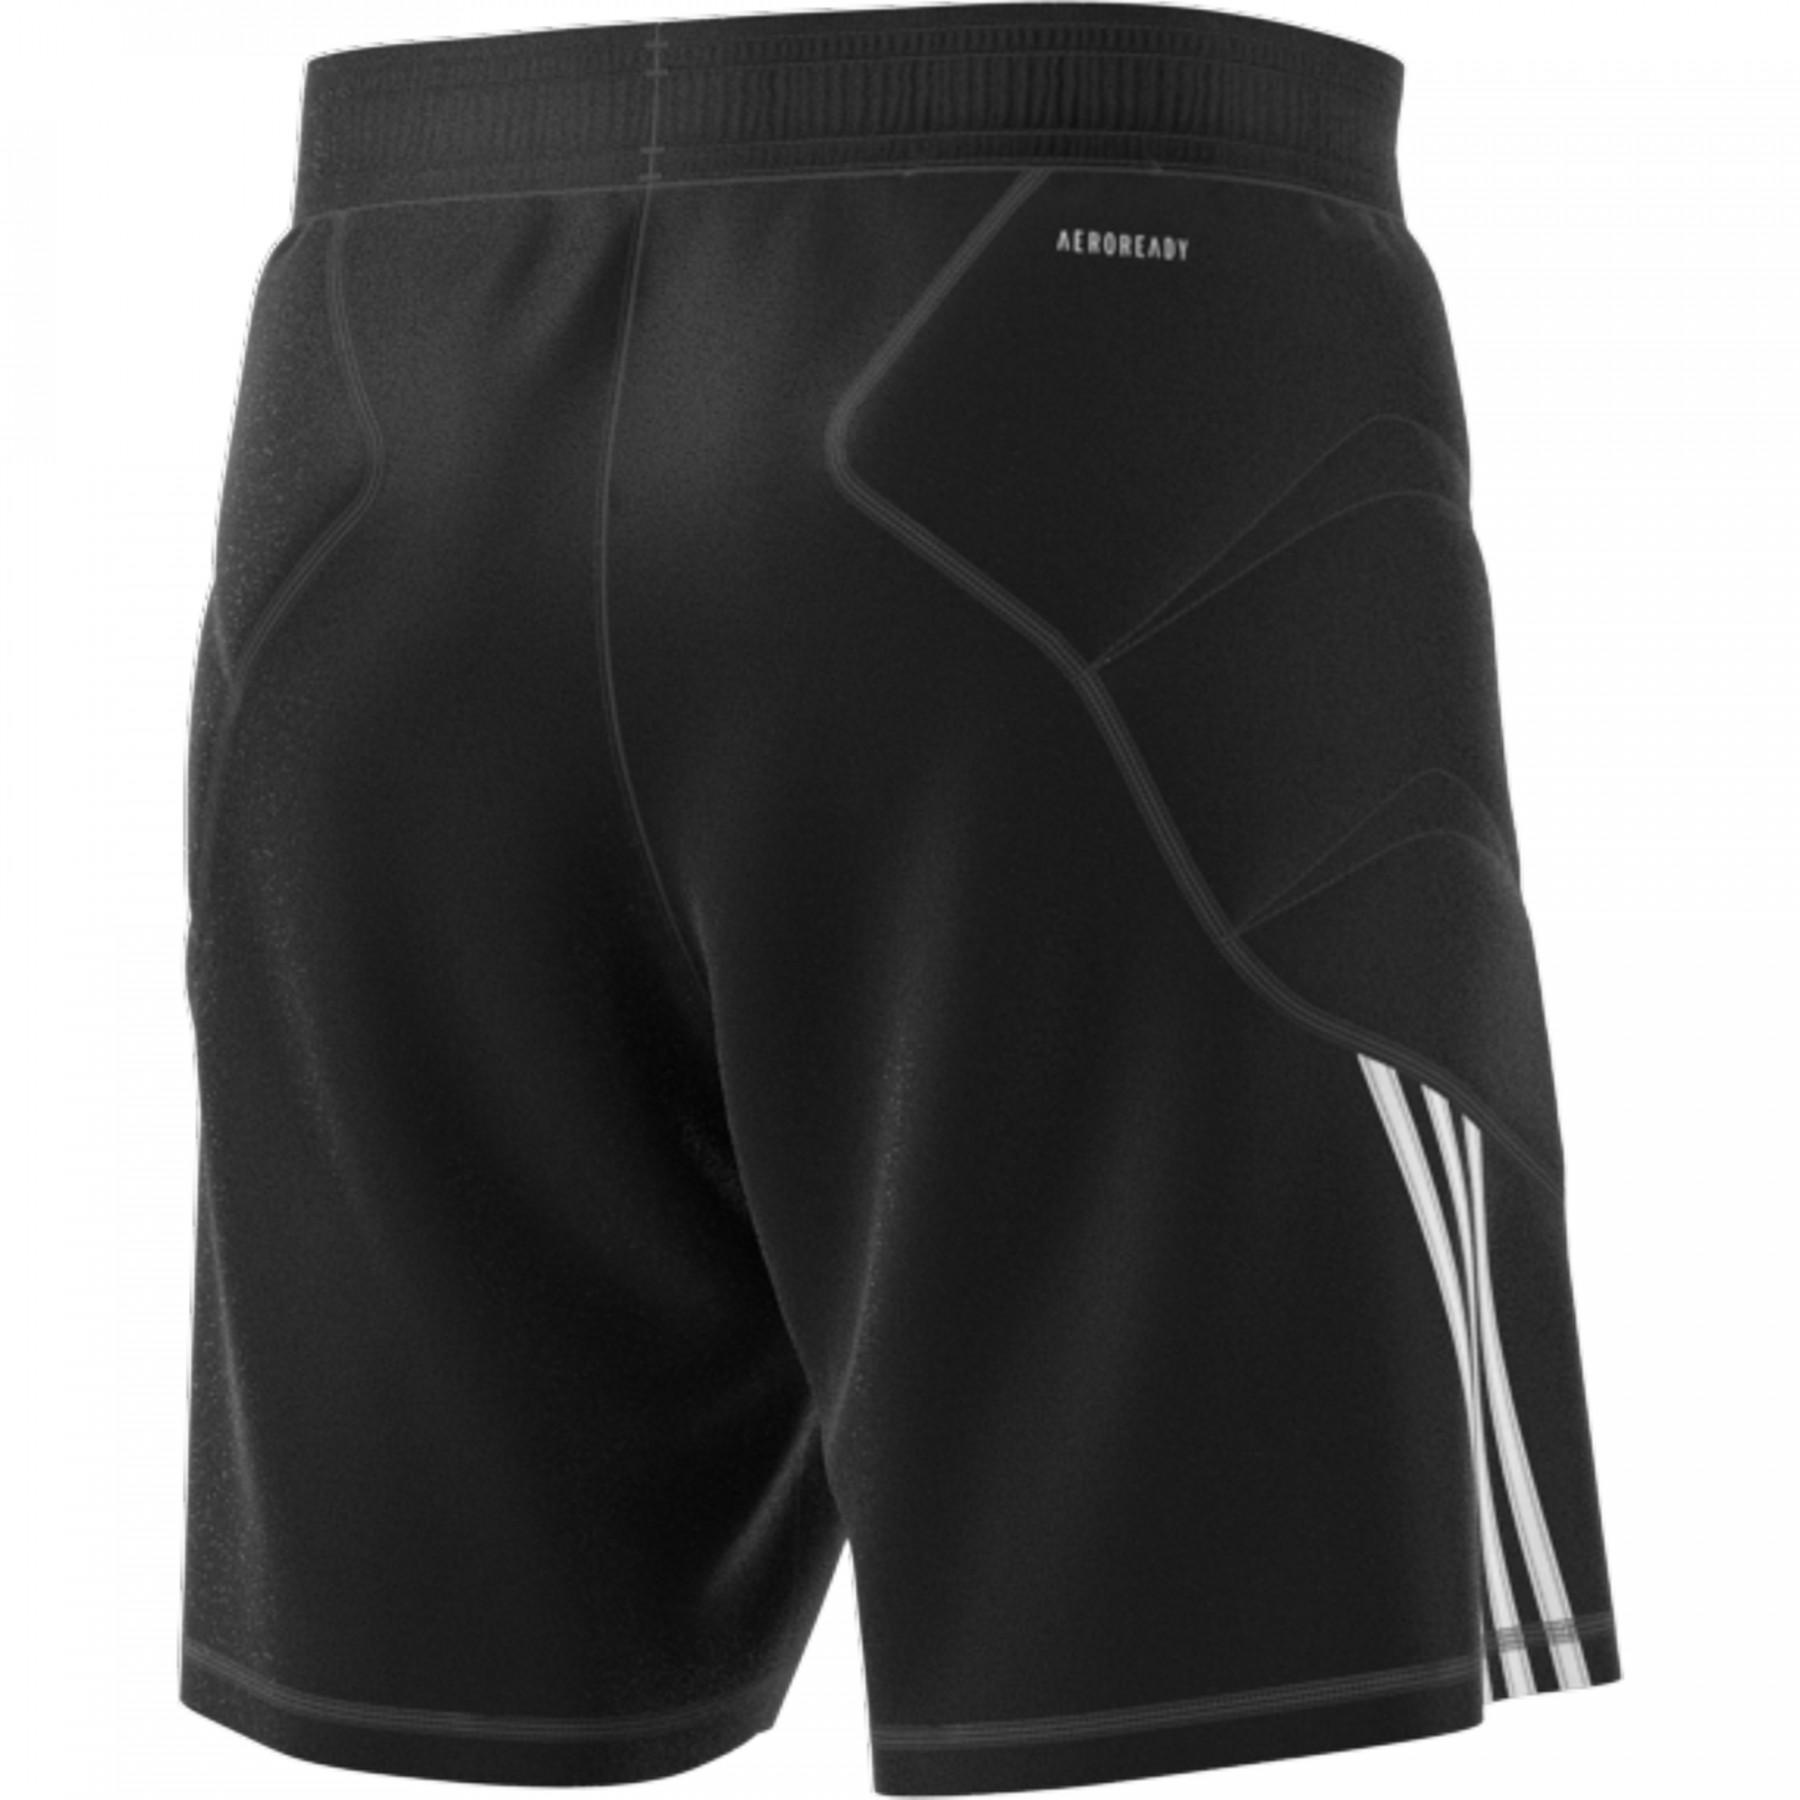 Goalkeeper shorts adidas Tierro